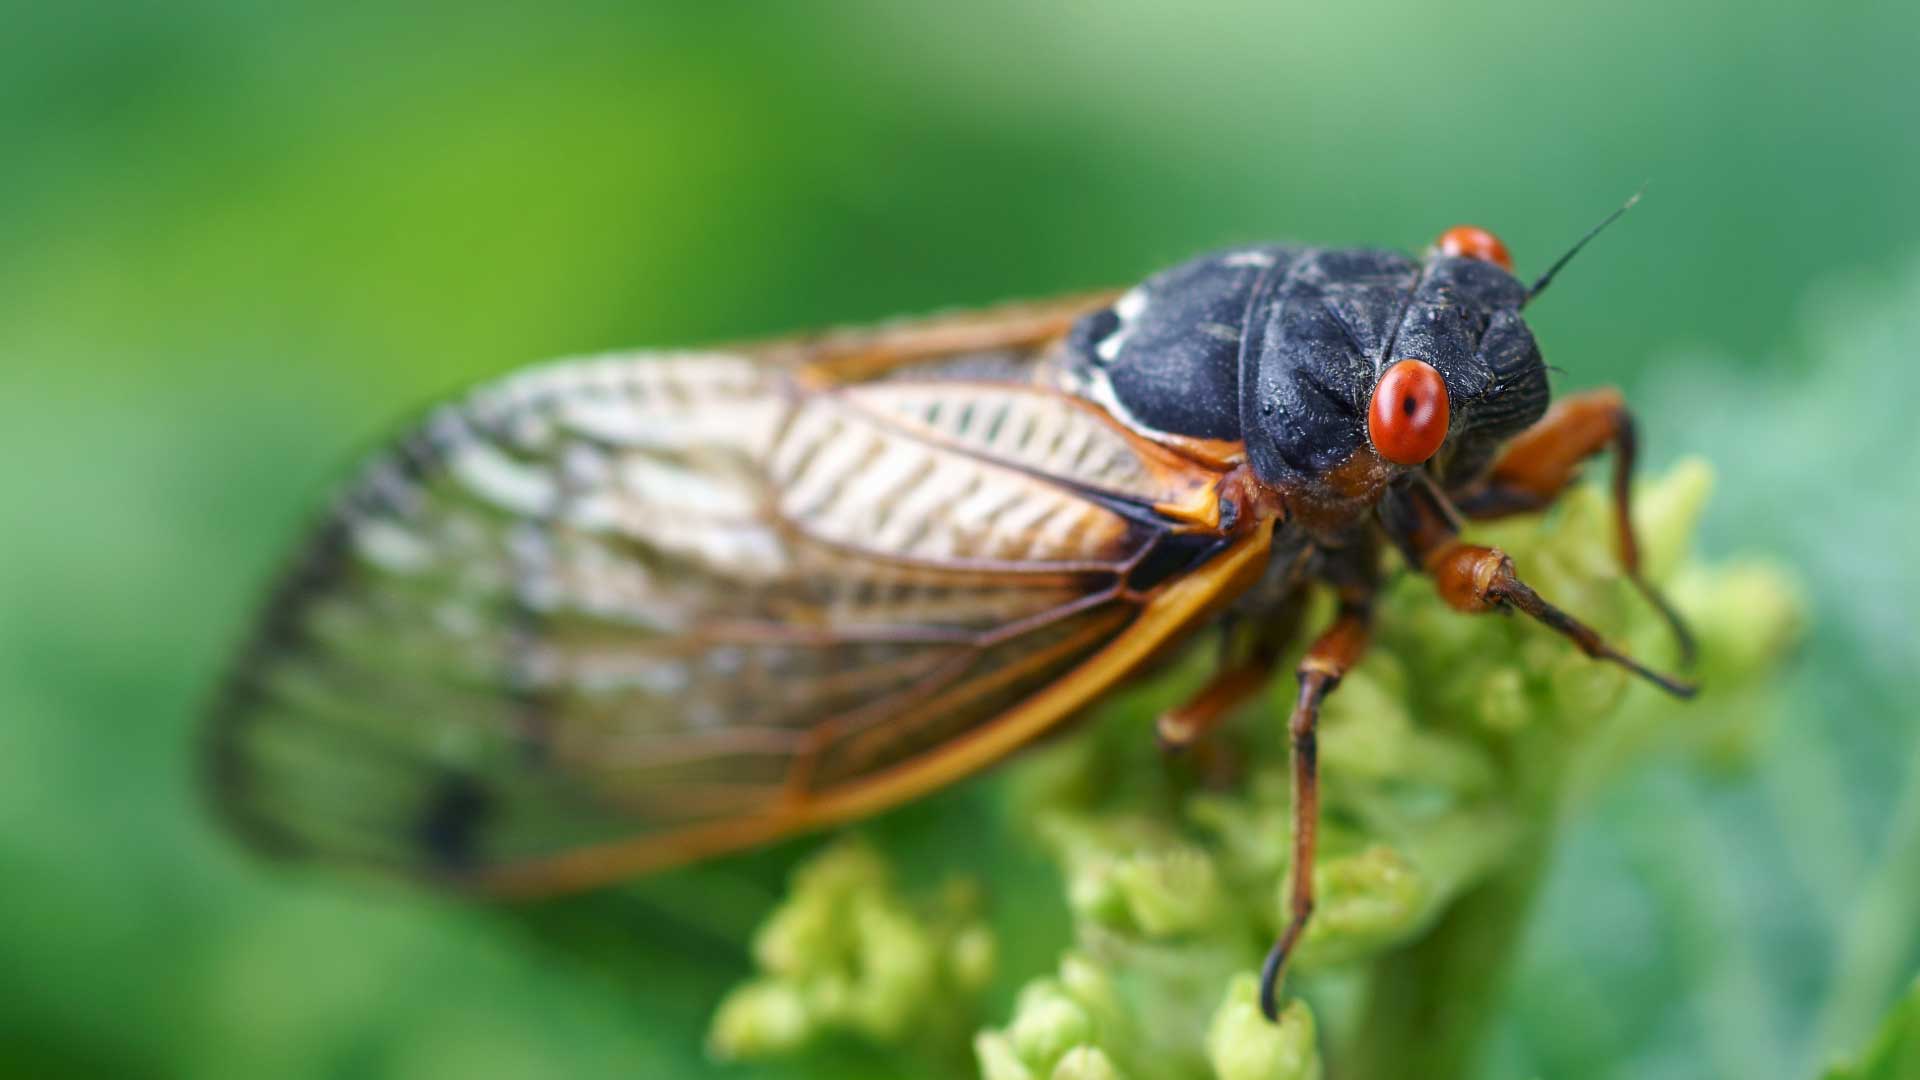 A close-up of a cicada on vegetation.